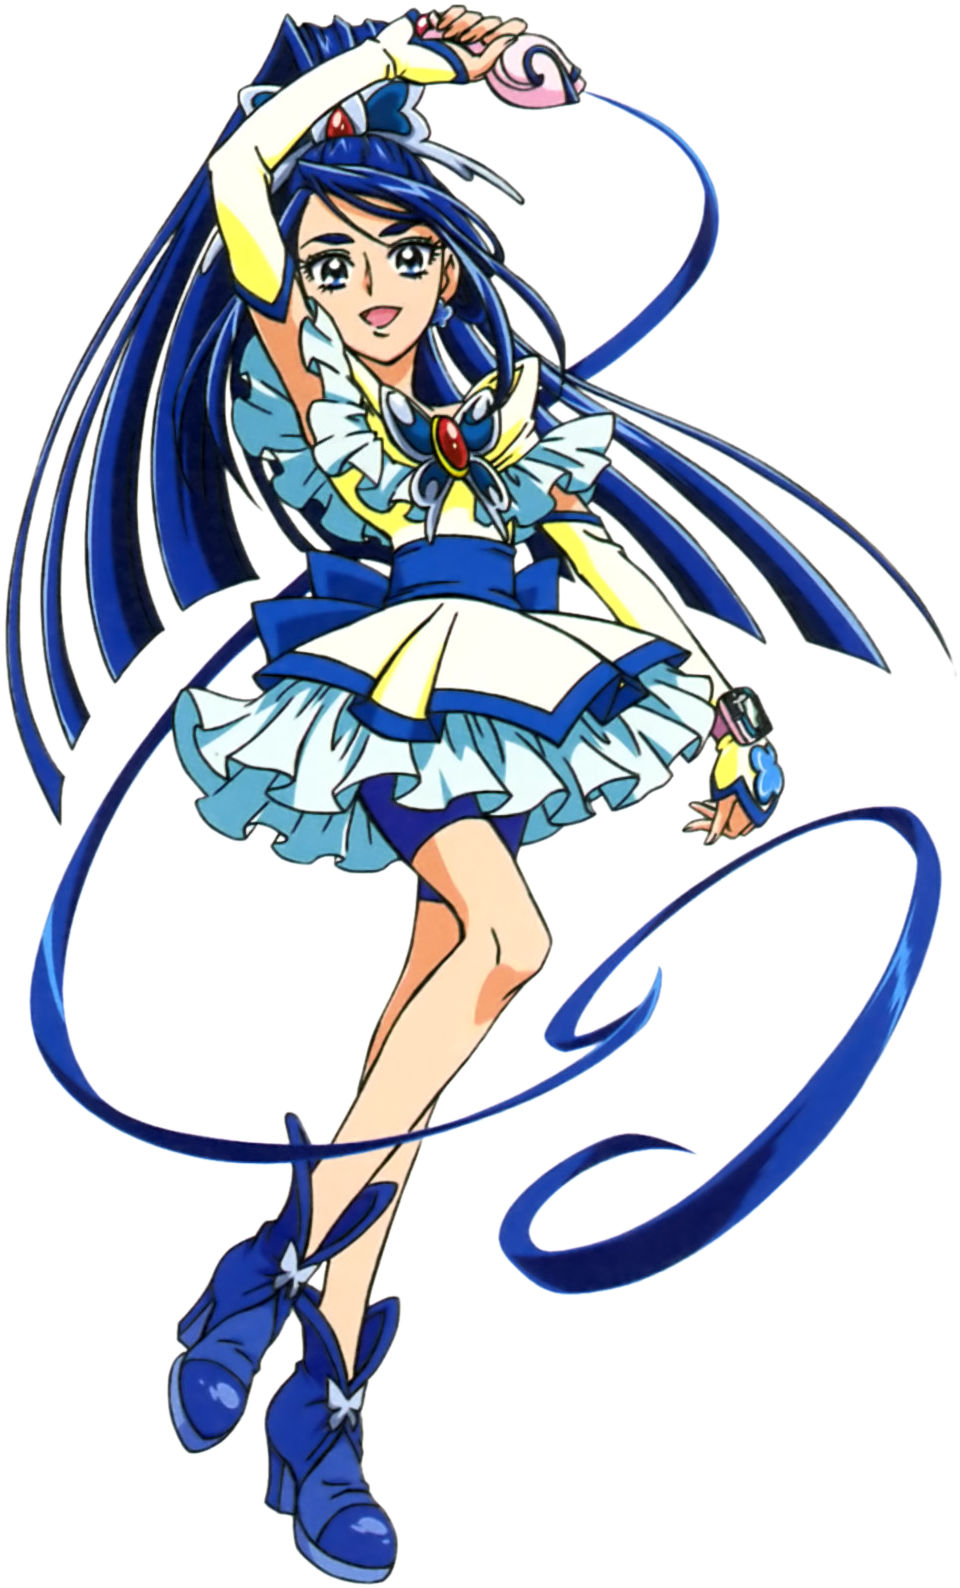 Image Yes Pretty Cure 5 Cure Aqua Pose4png Magical Girl Mahou Shoujo 魔法少女 Wiki 7388